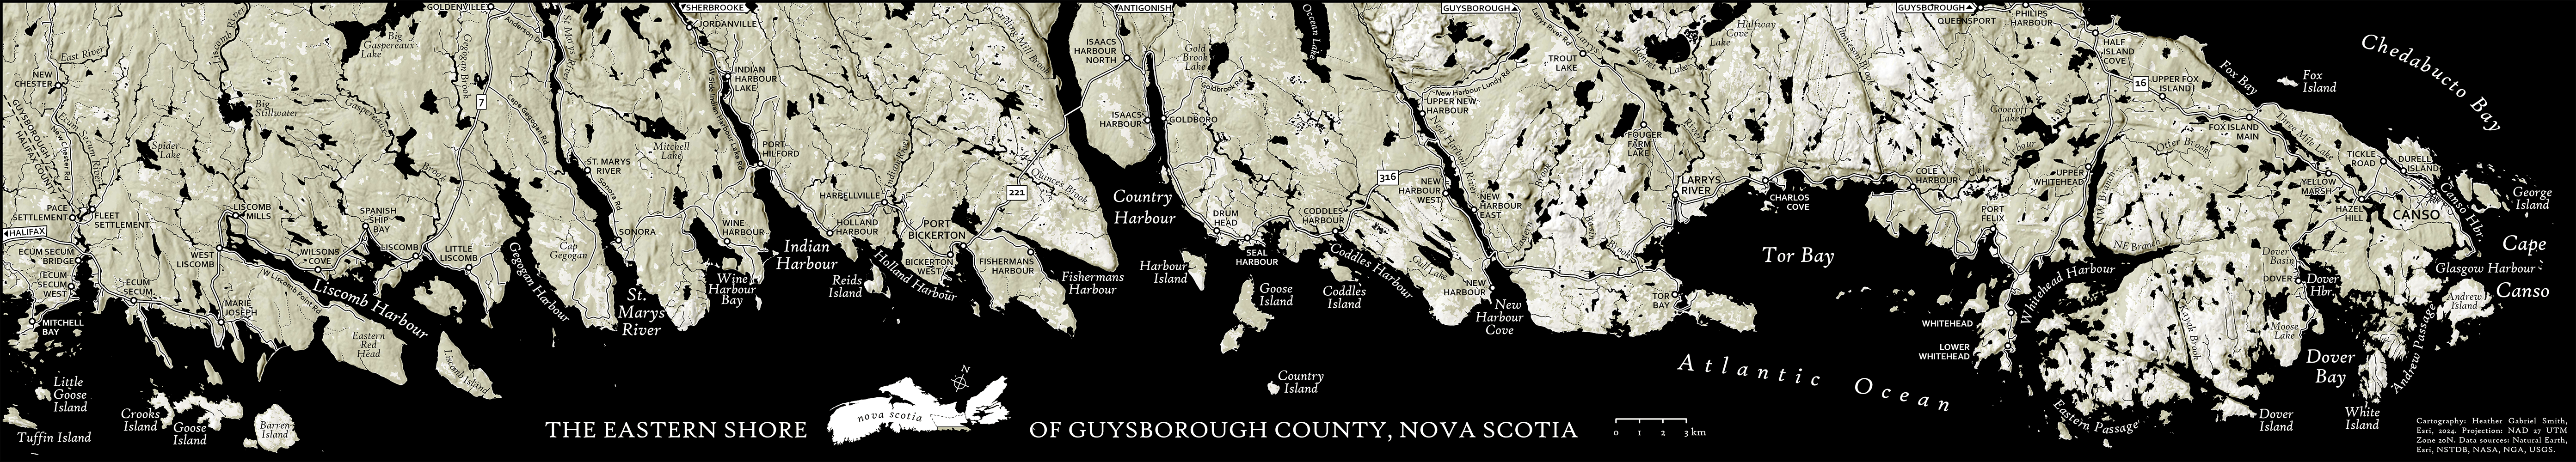 Map of the Eastern Shore of Guysborough County, Nova Scotia